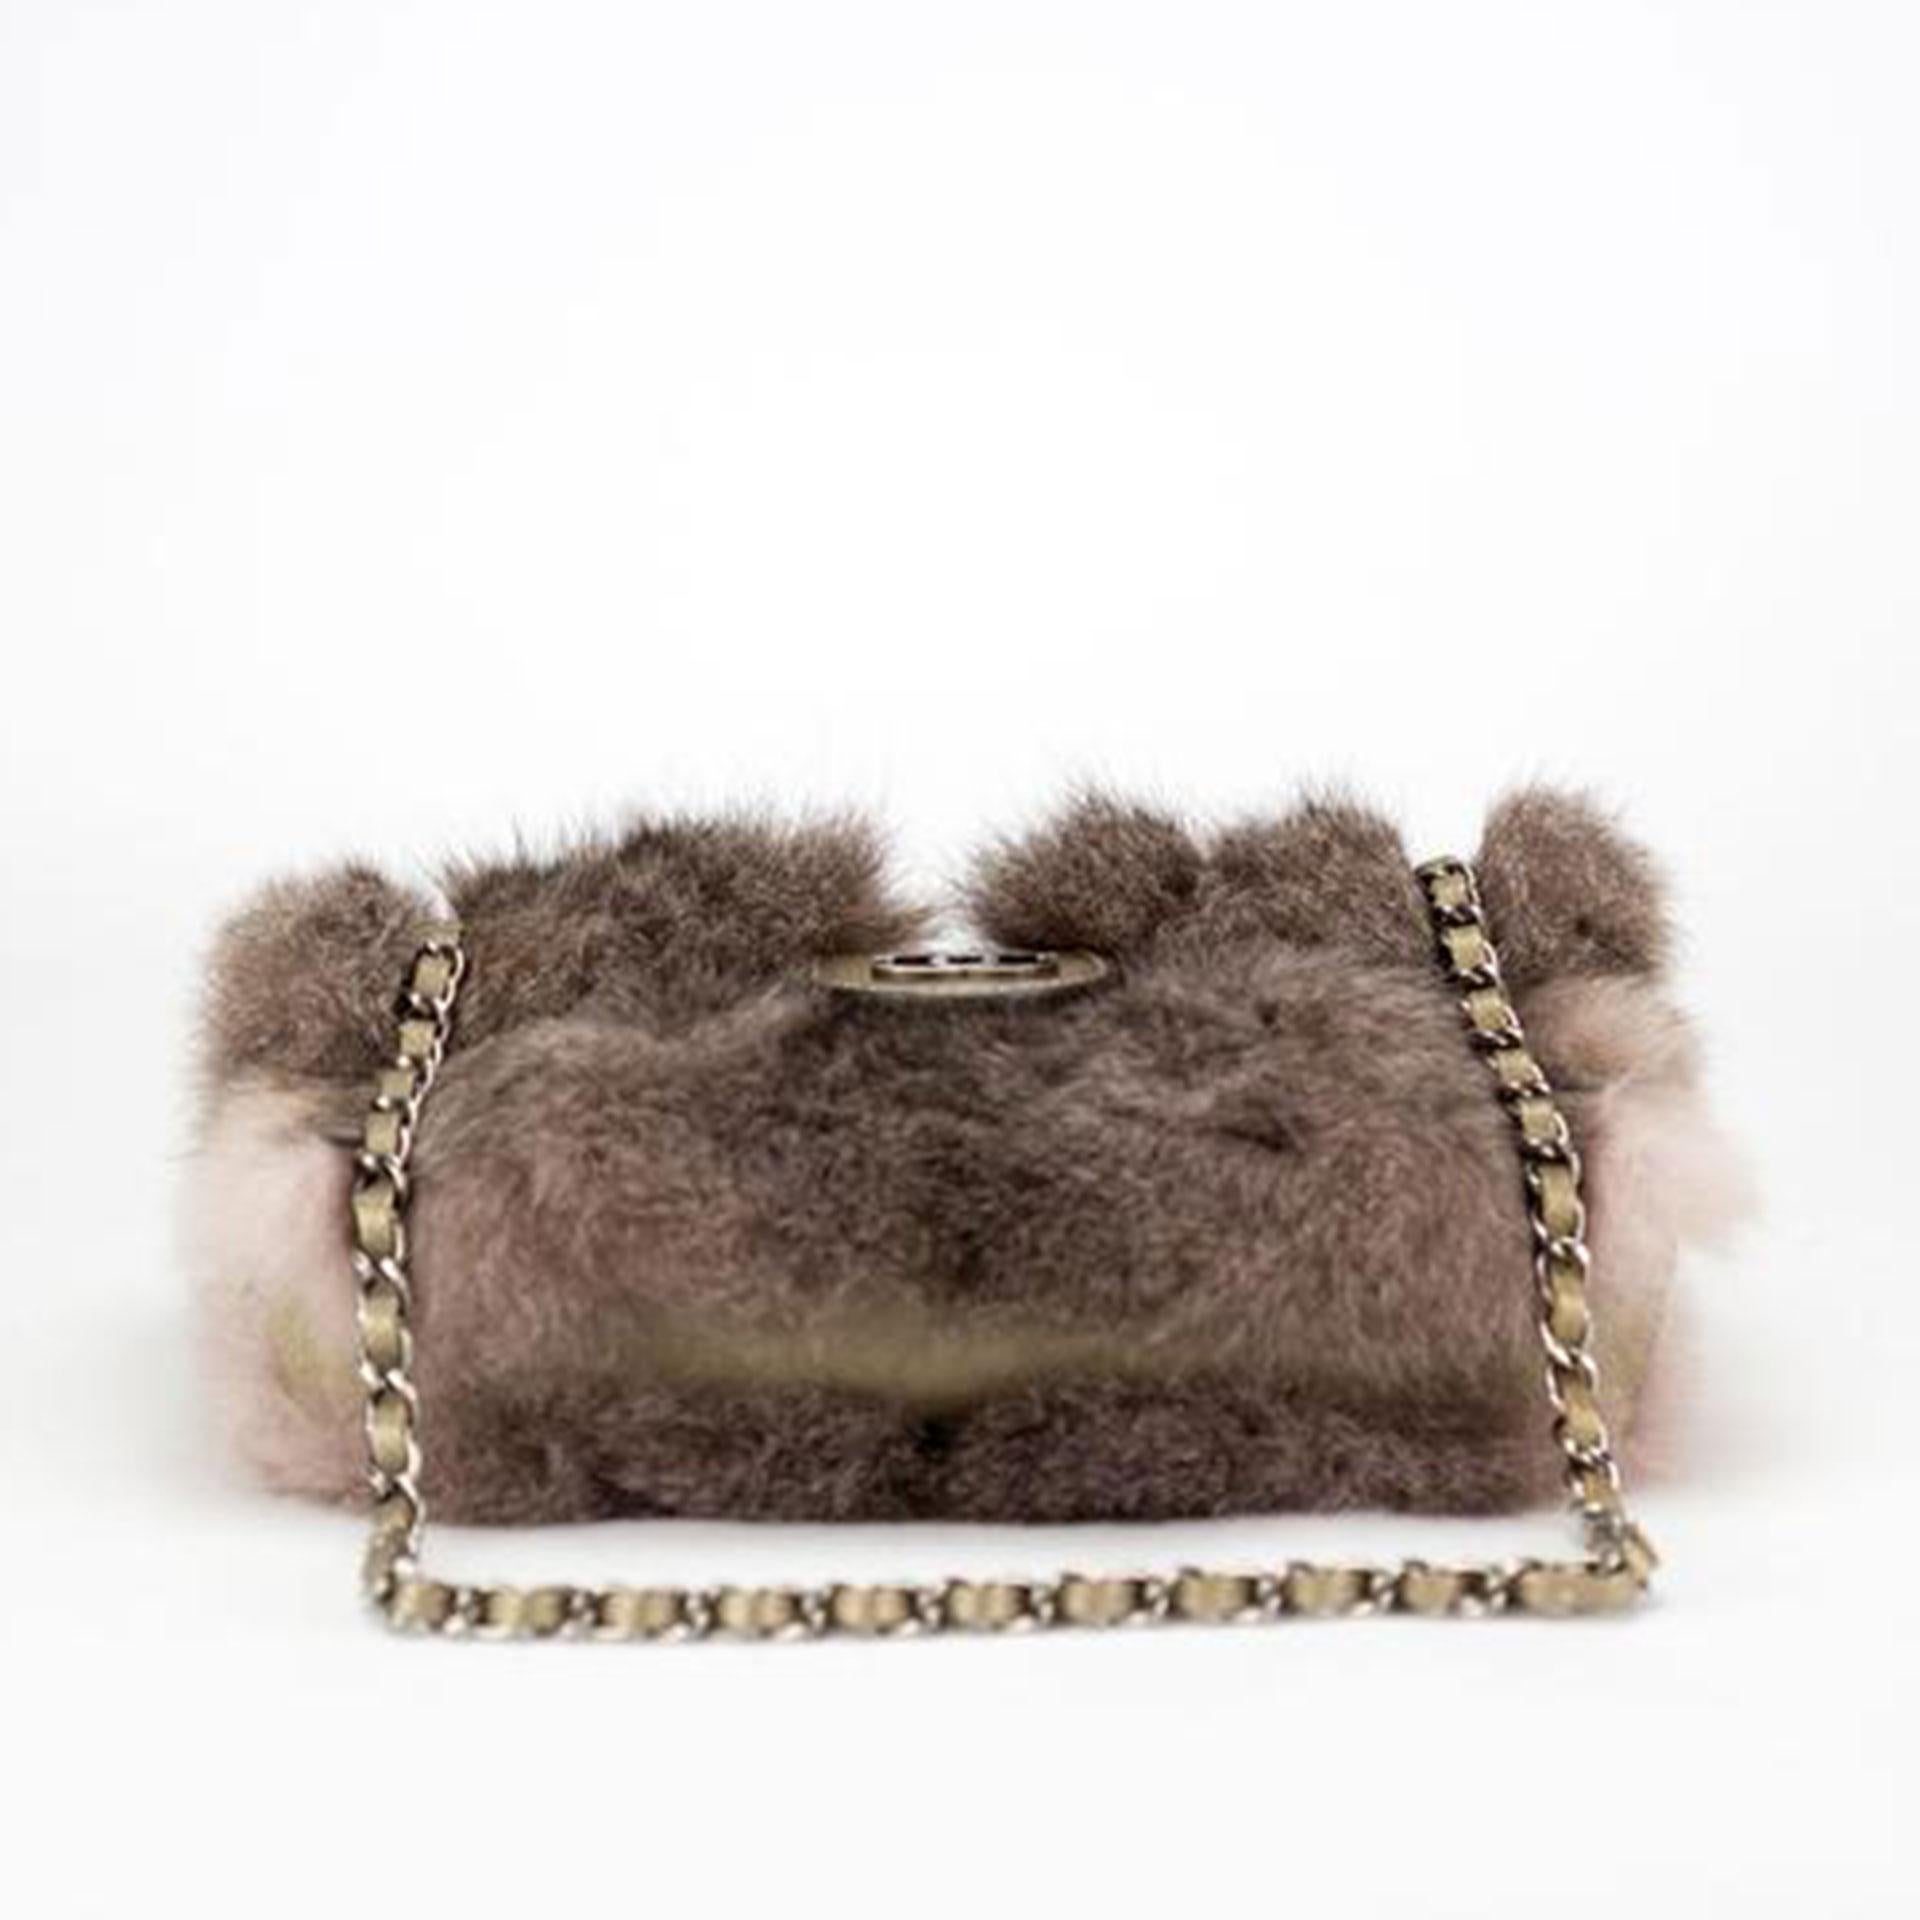 Chanel Classic Flap Brown and Beige Fur Deerskin Leather Shoulder Bag ...